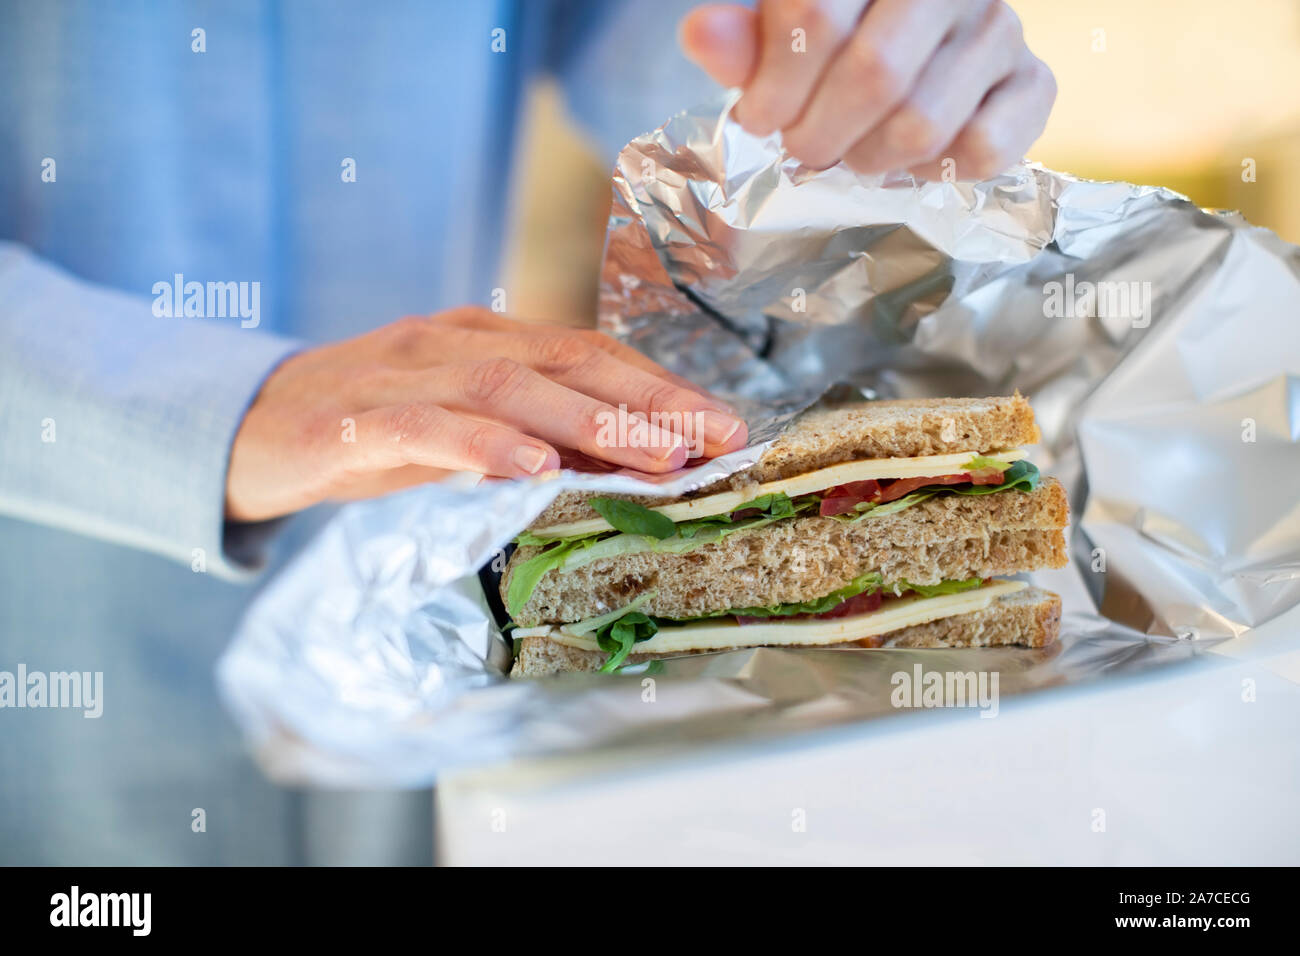 Papel de aluminio sándwich fotografías e imágenes de alta resolución - Alamy